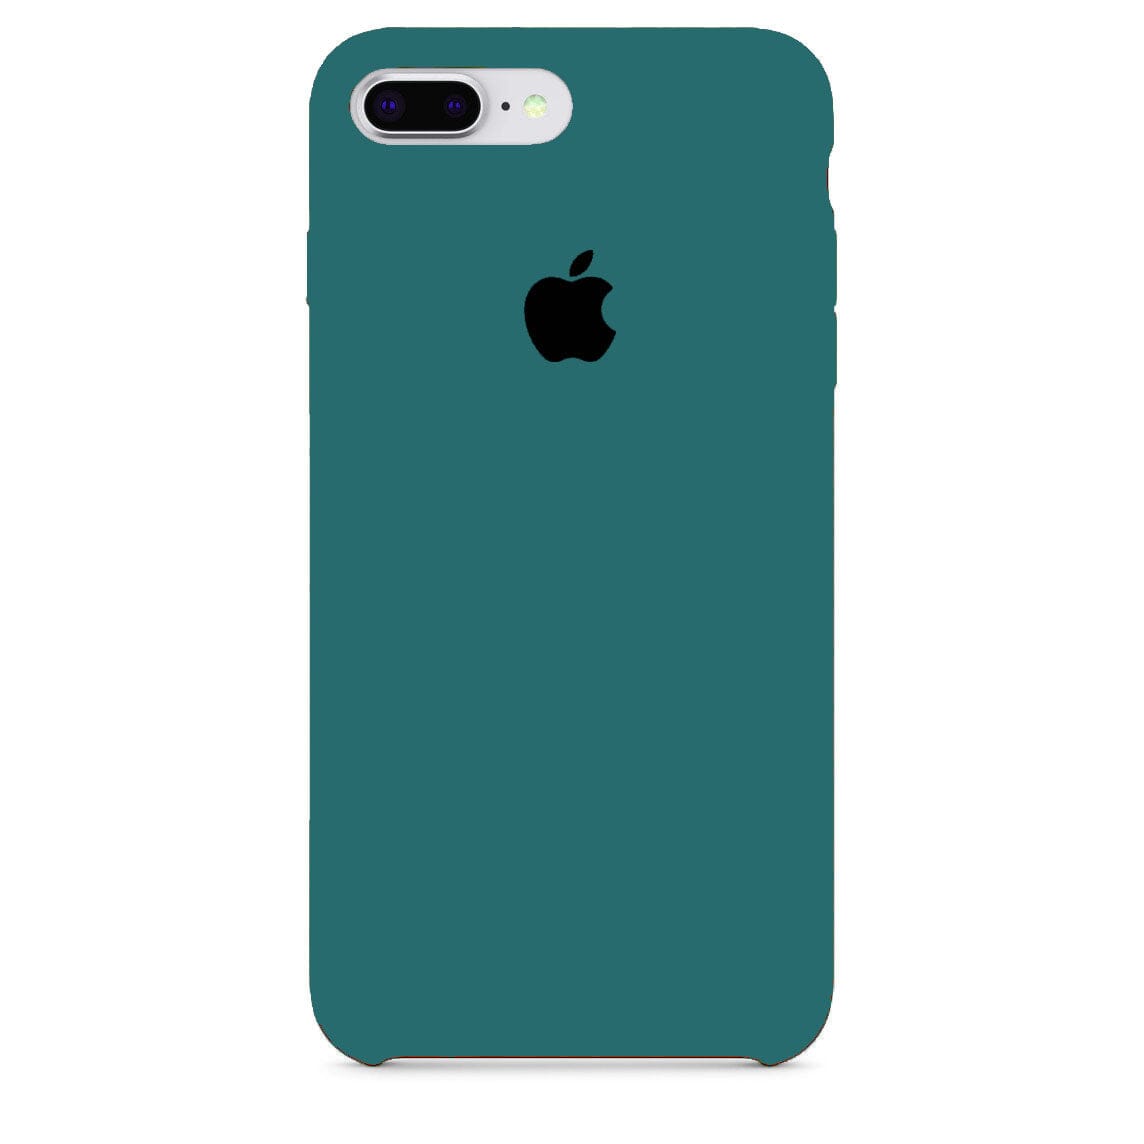 Husa iPhone Silicone Case Pine Green Anca's Store 7Plus/8Plus 